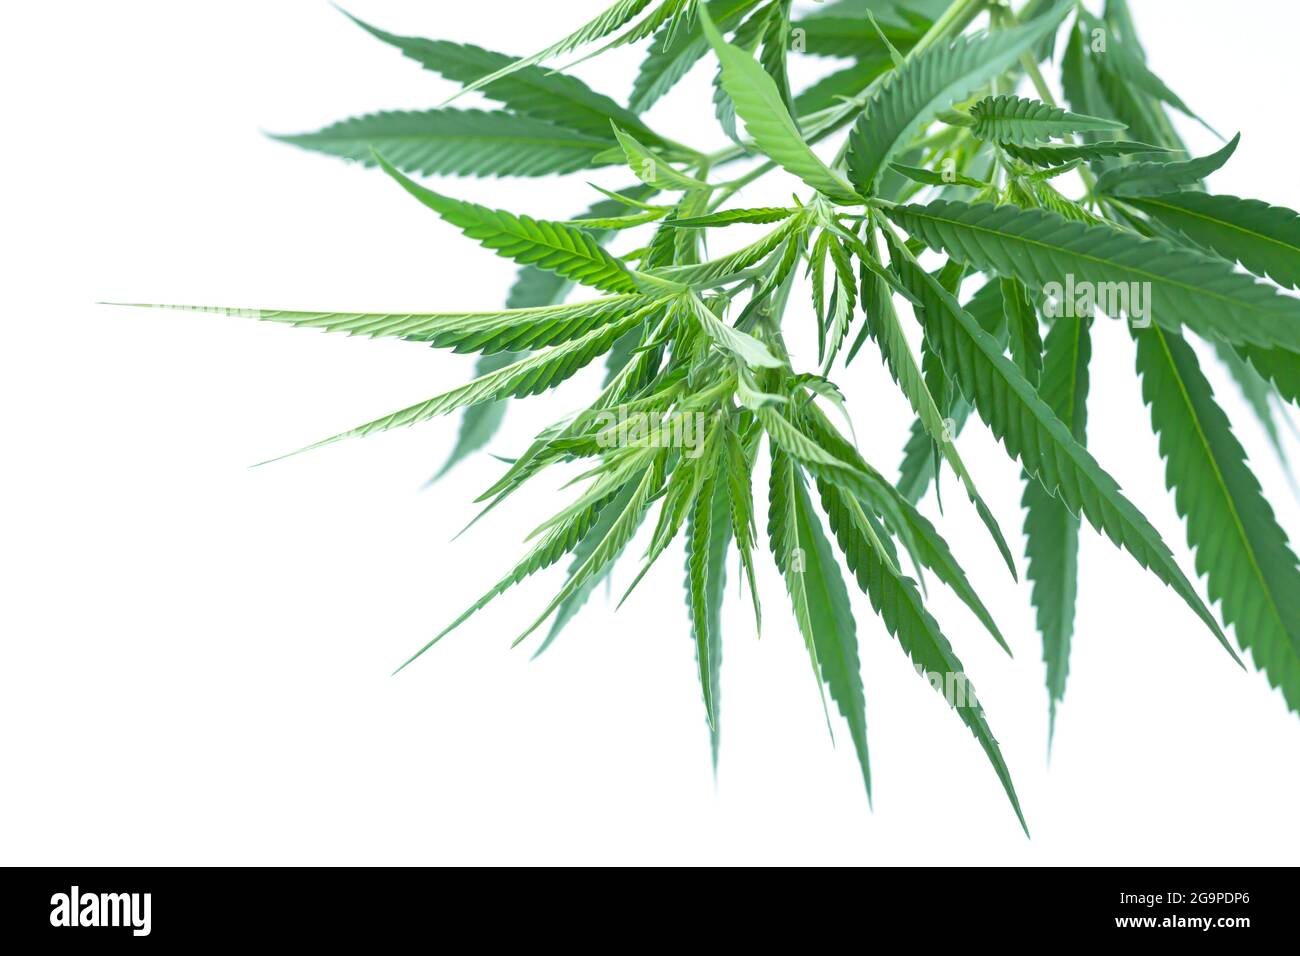 Cannabis or hemp plant leaves isolated on white background. Growing medical marijuana concept Stock Photo